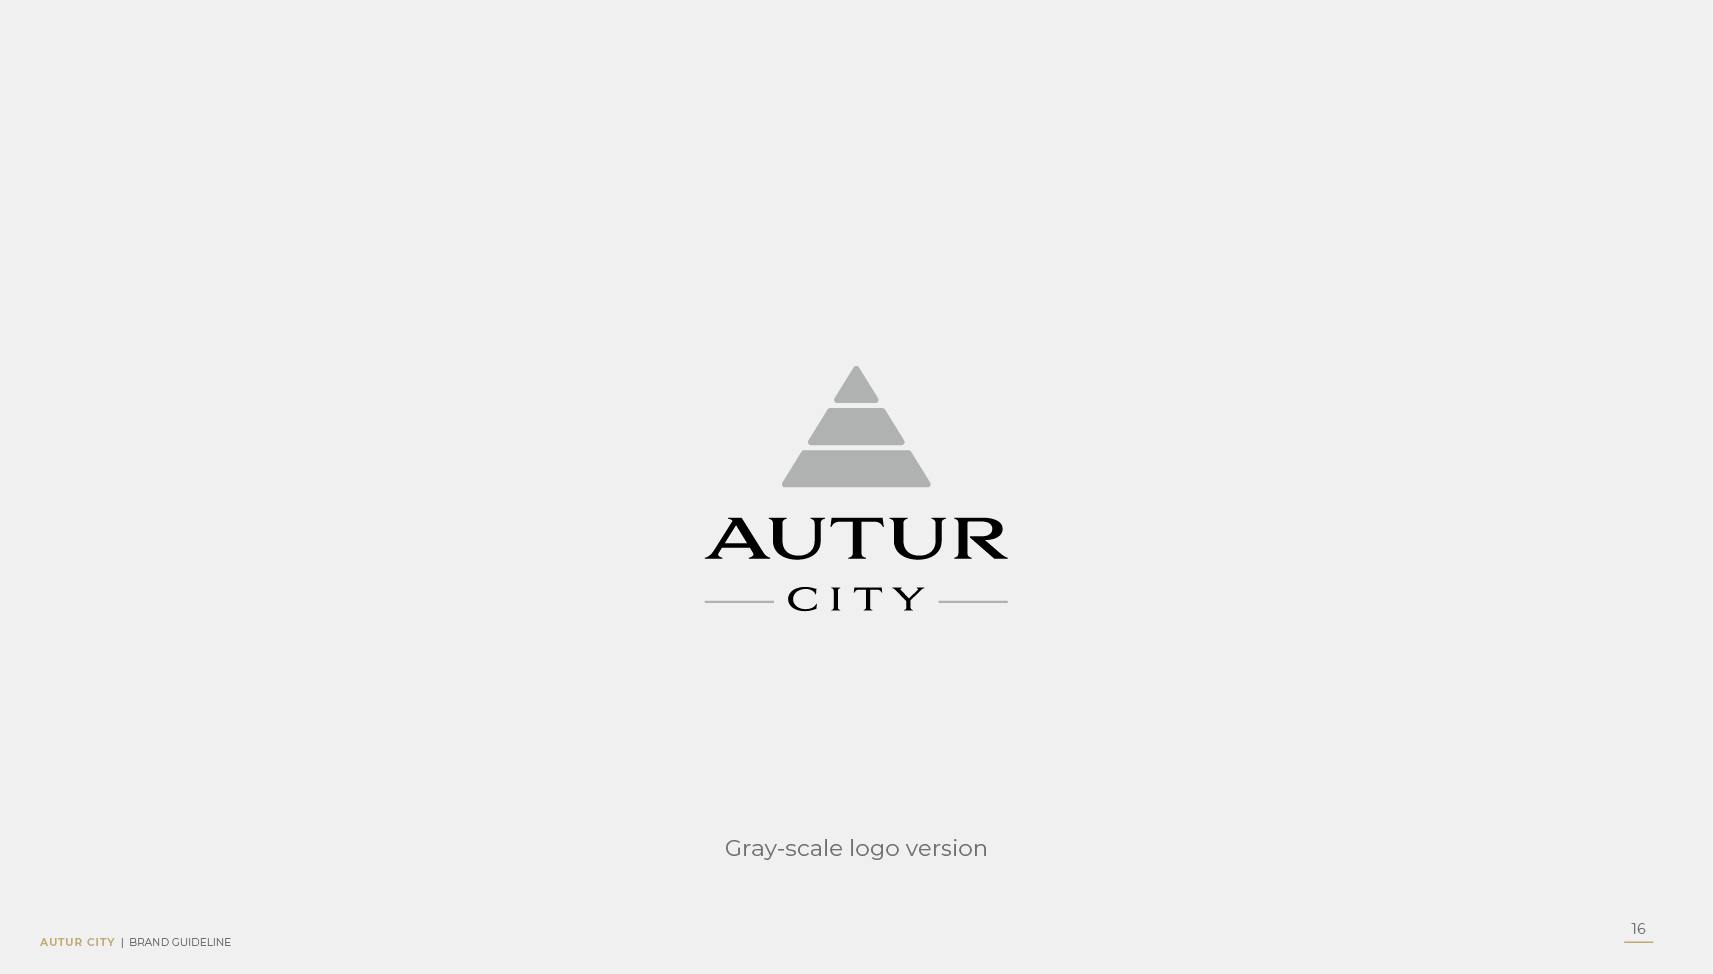 Autut City Brand Guideline16